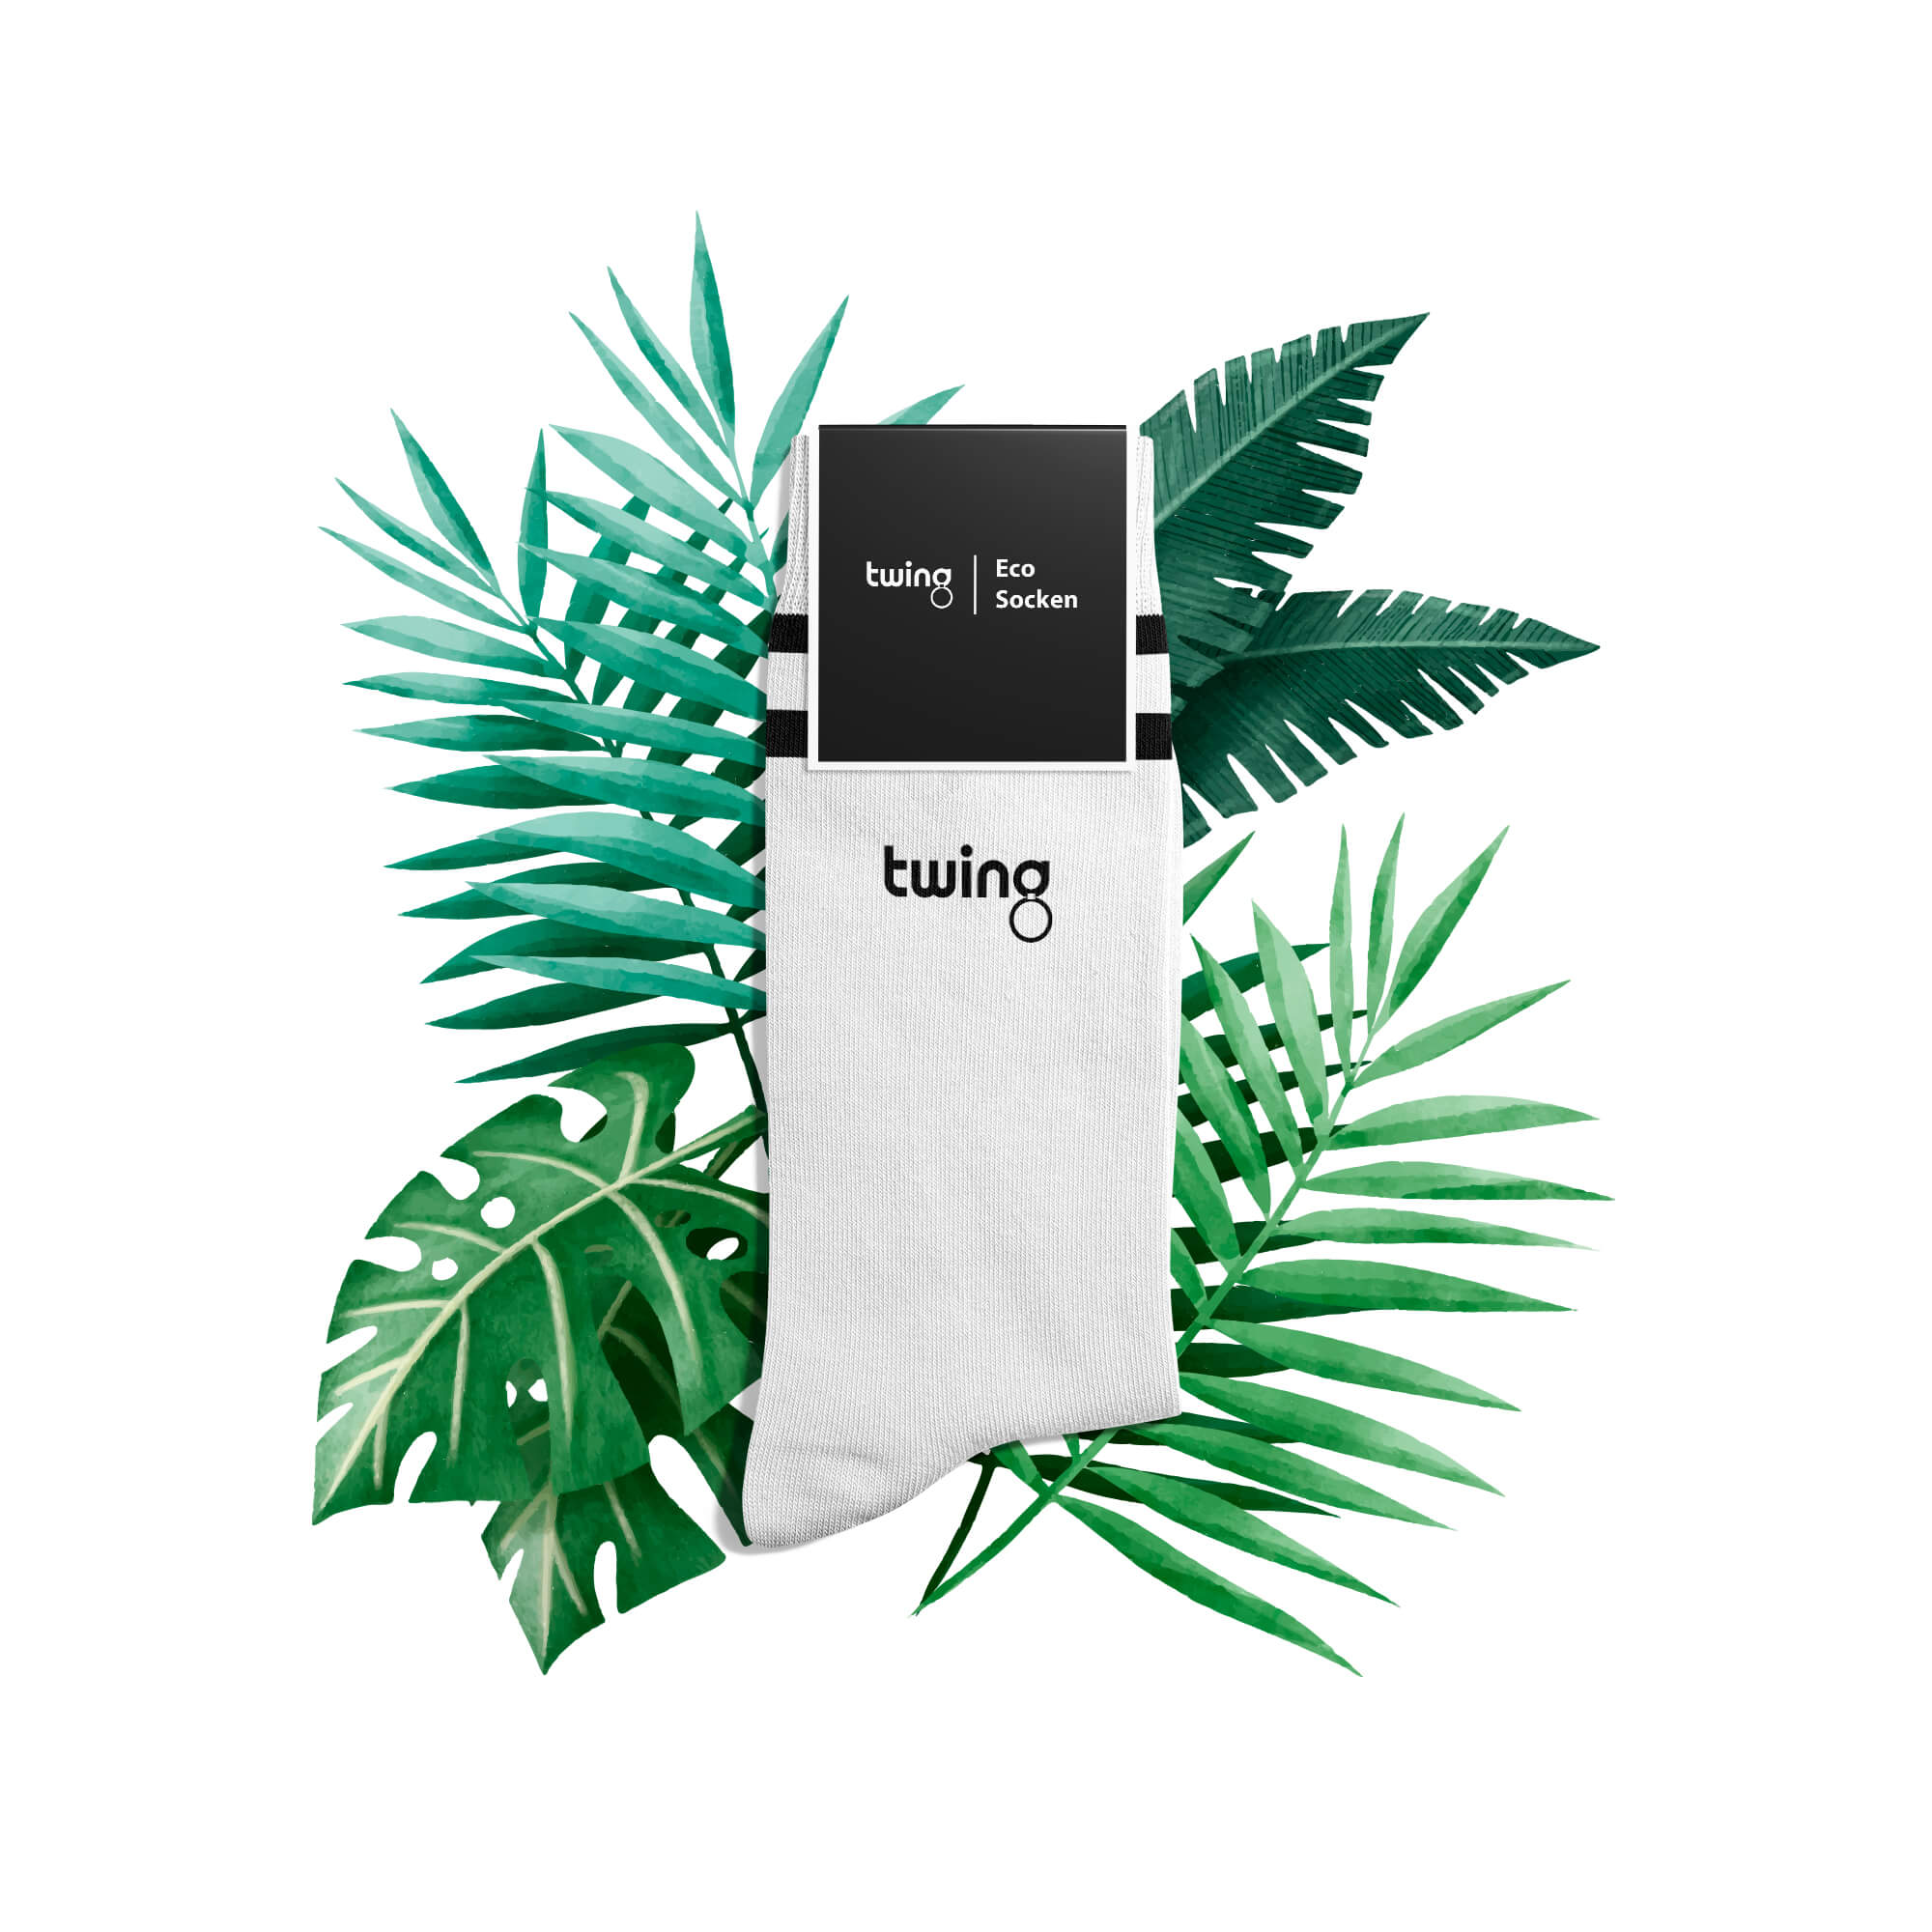 Twing Eco Socken mit bedruckten Logo